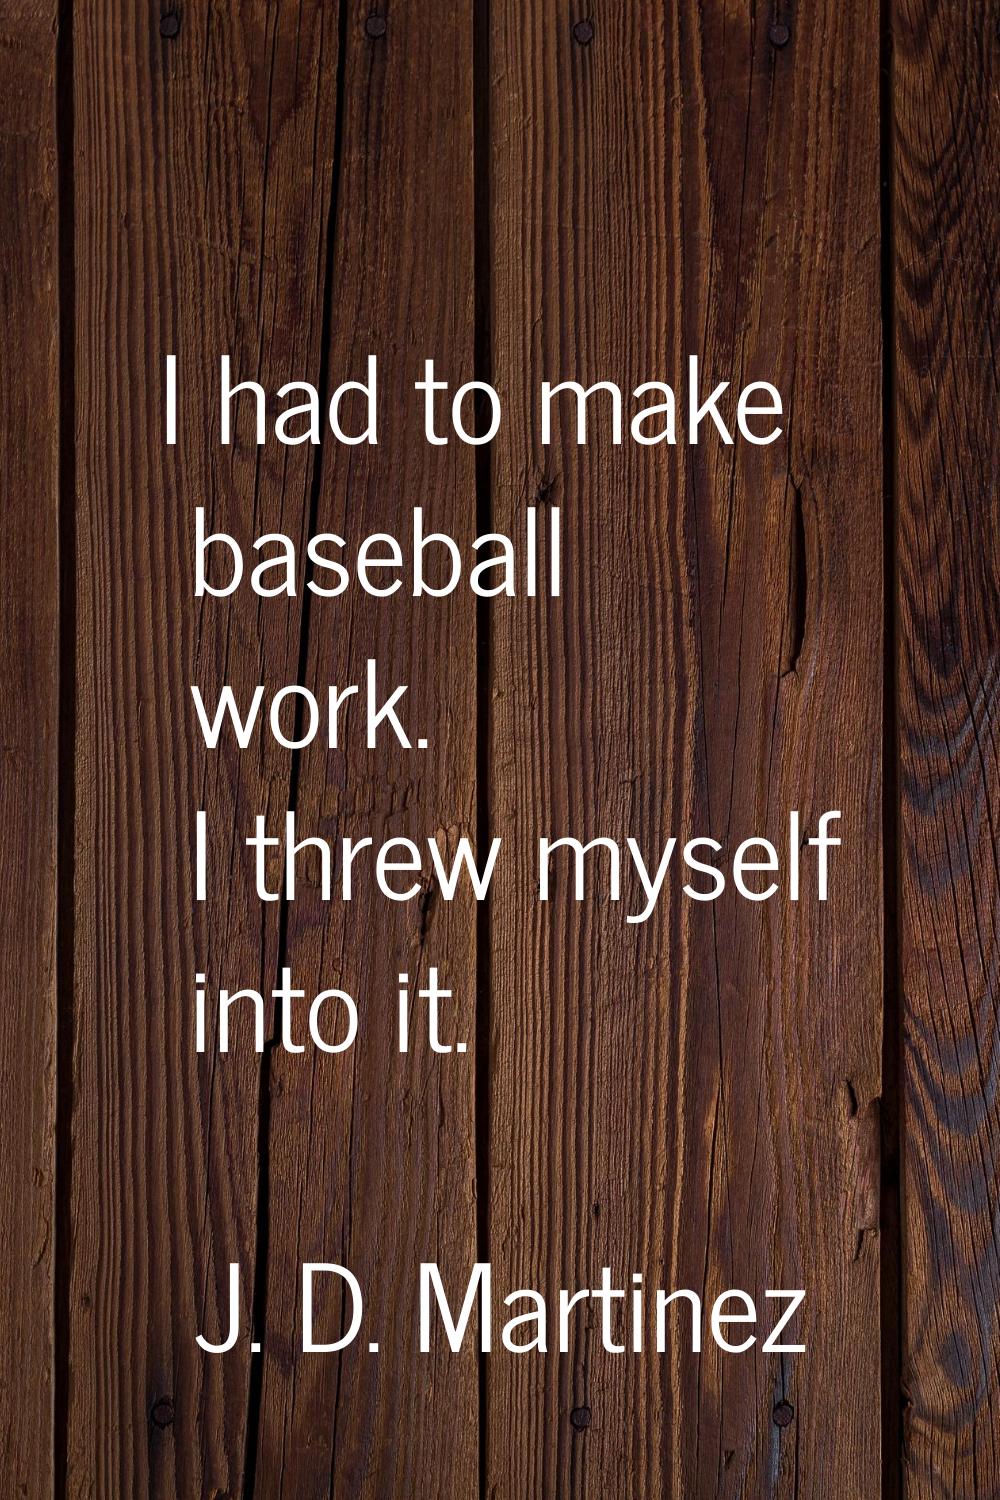 I had to make baseball work. I threw myself into it.